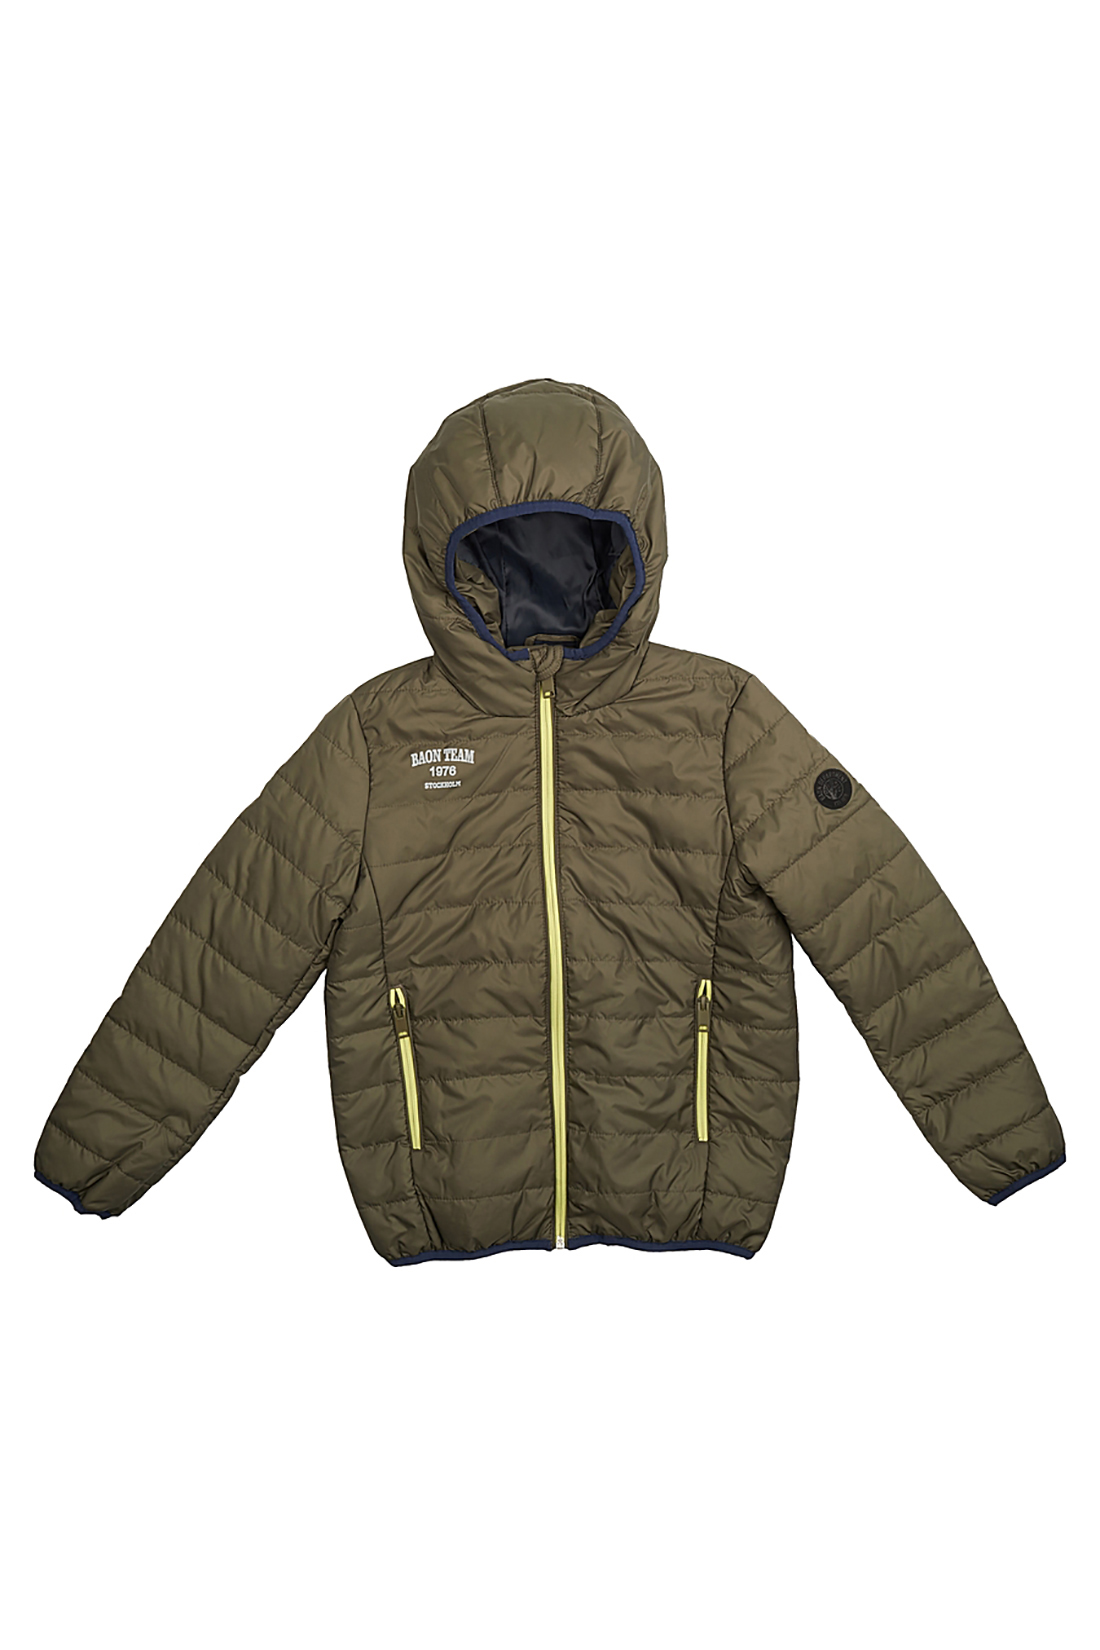 Куртка для мальчика (арт. baon BJ538001), размер 134-140, цвет зеленый Куртка для мальчика (арт. baon BJ538001) - фото 3